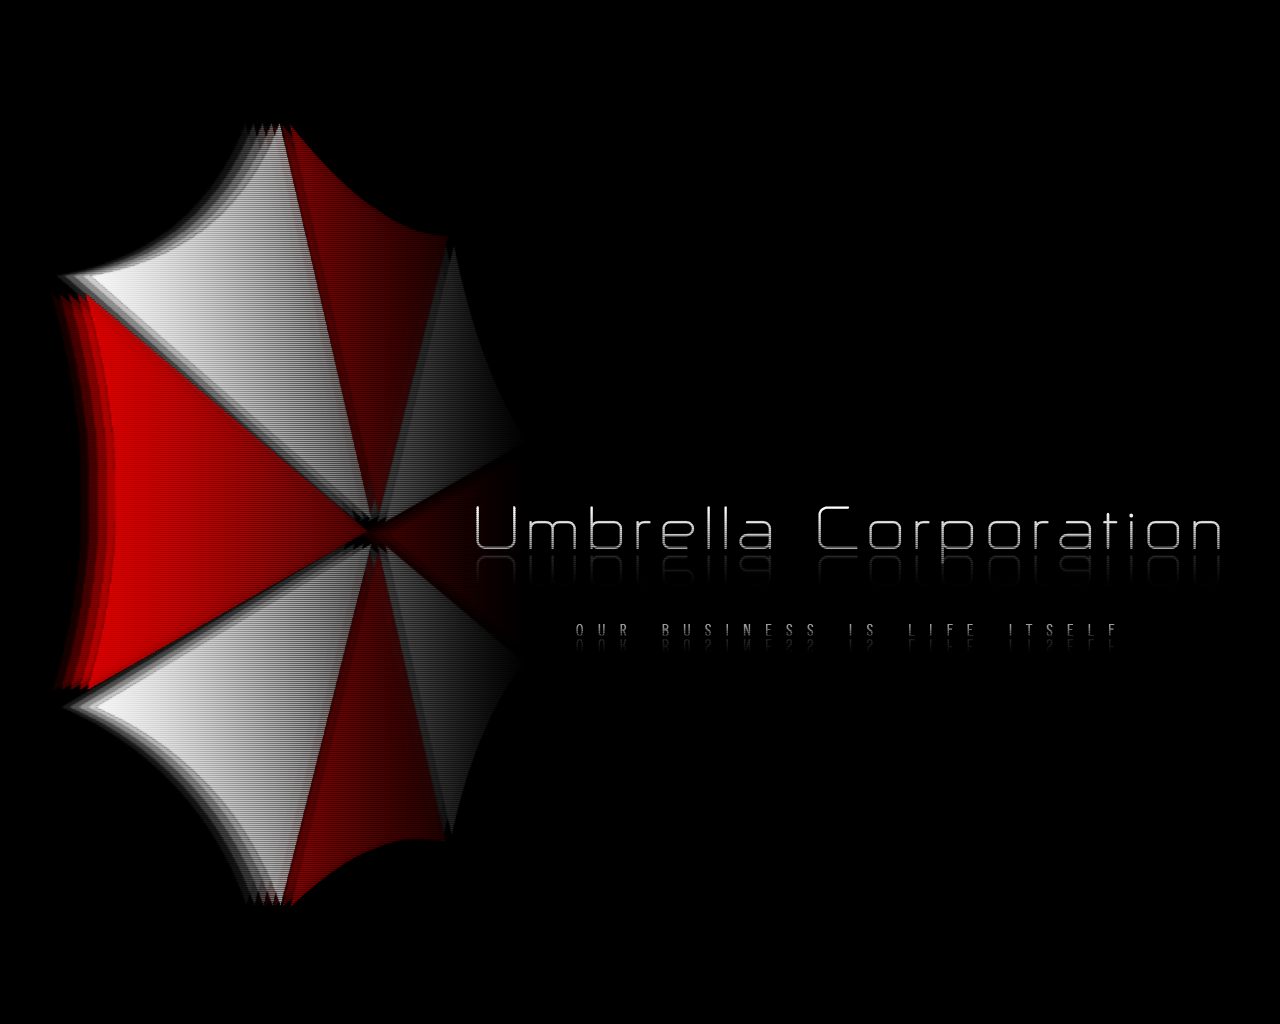 Umbrella Corp Wallpaper 01 By Disease Of Machinery On Deviantart